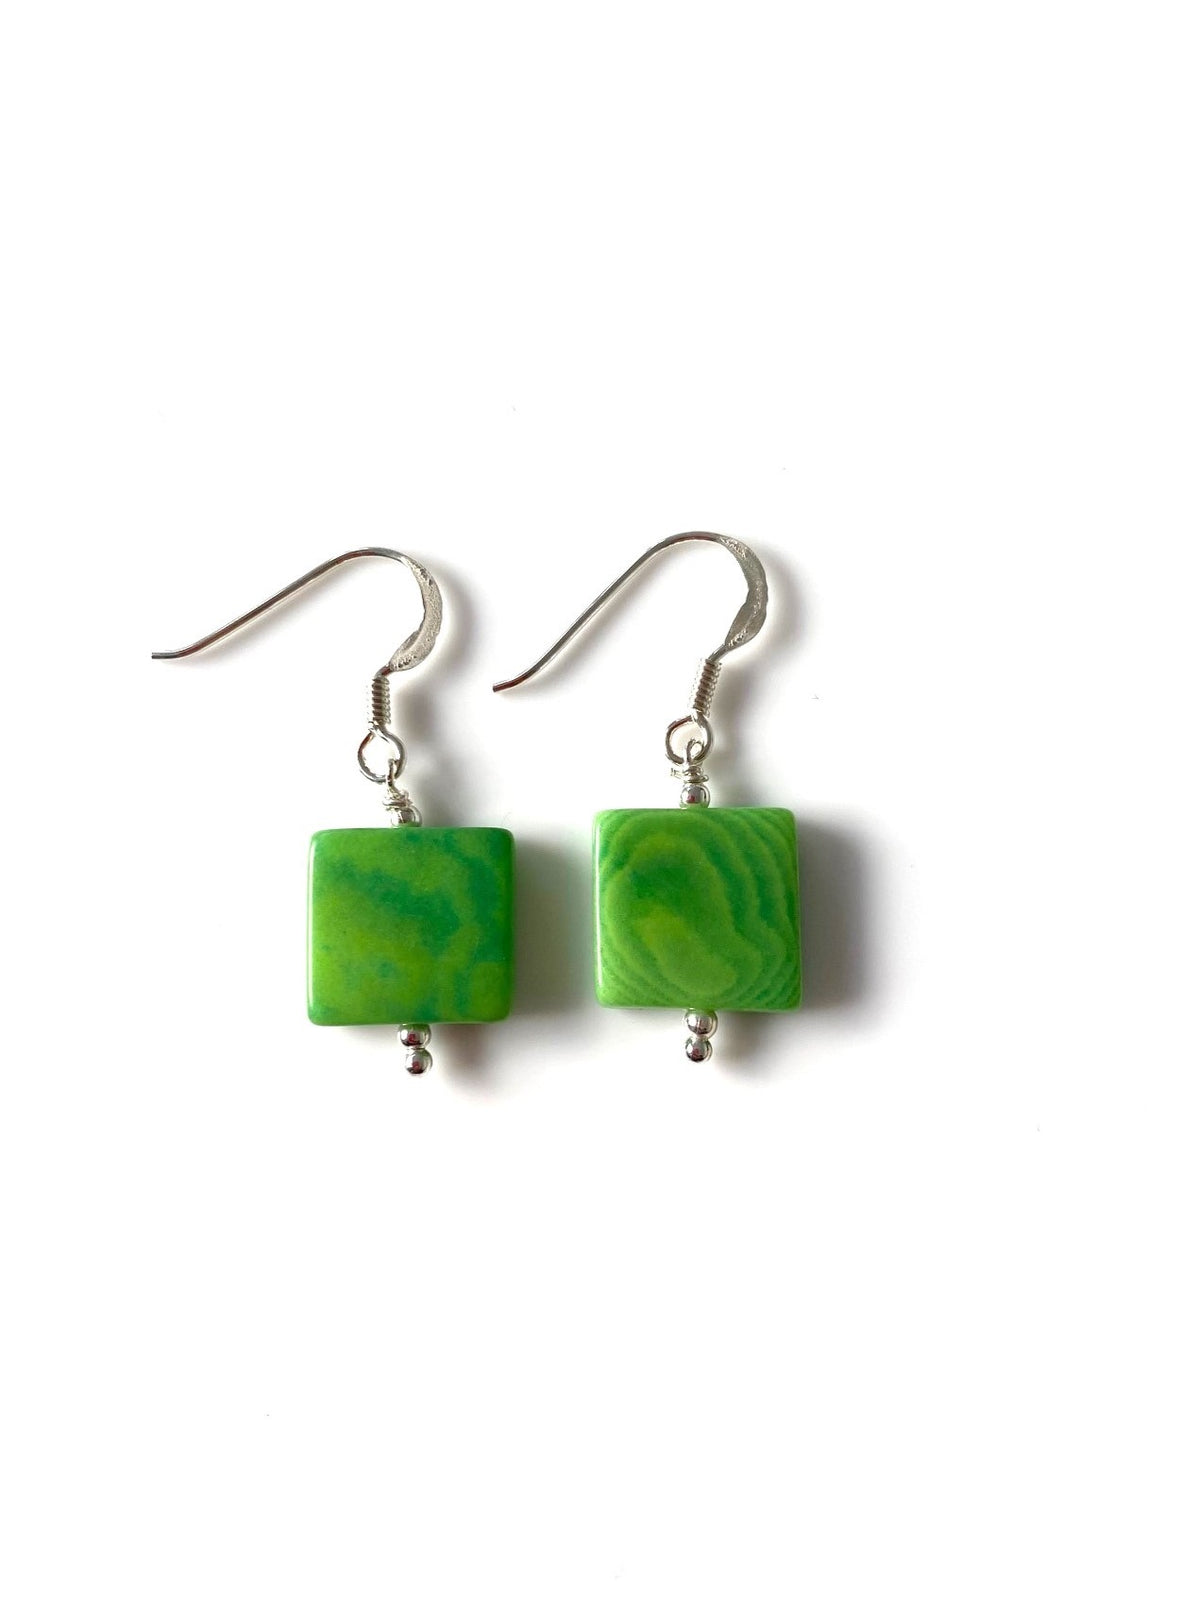 Cuadritos earrings (11mm) - Green